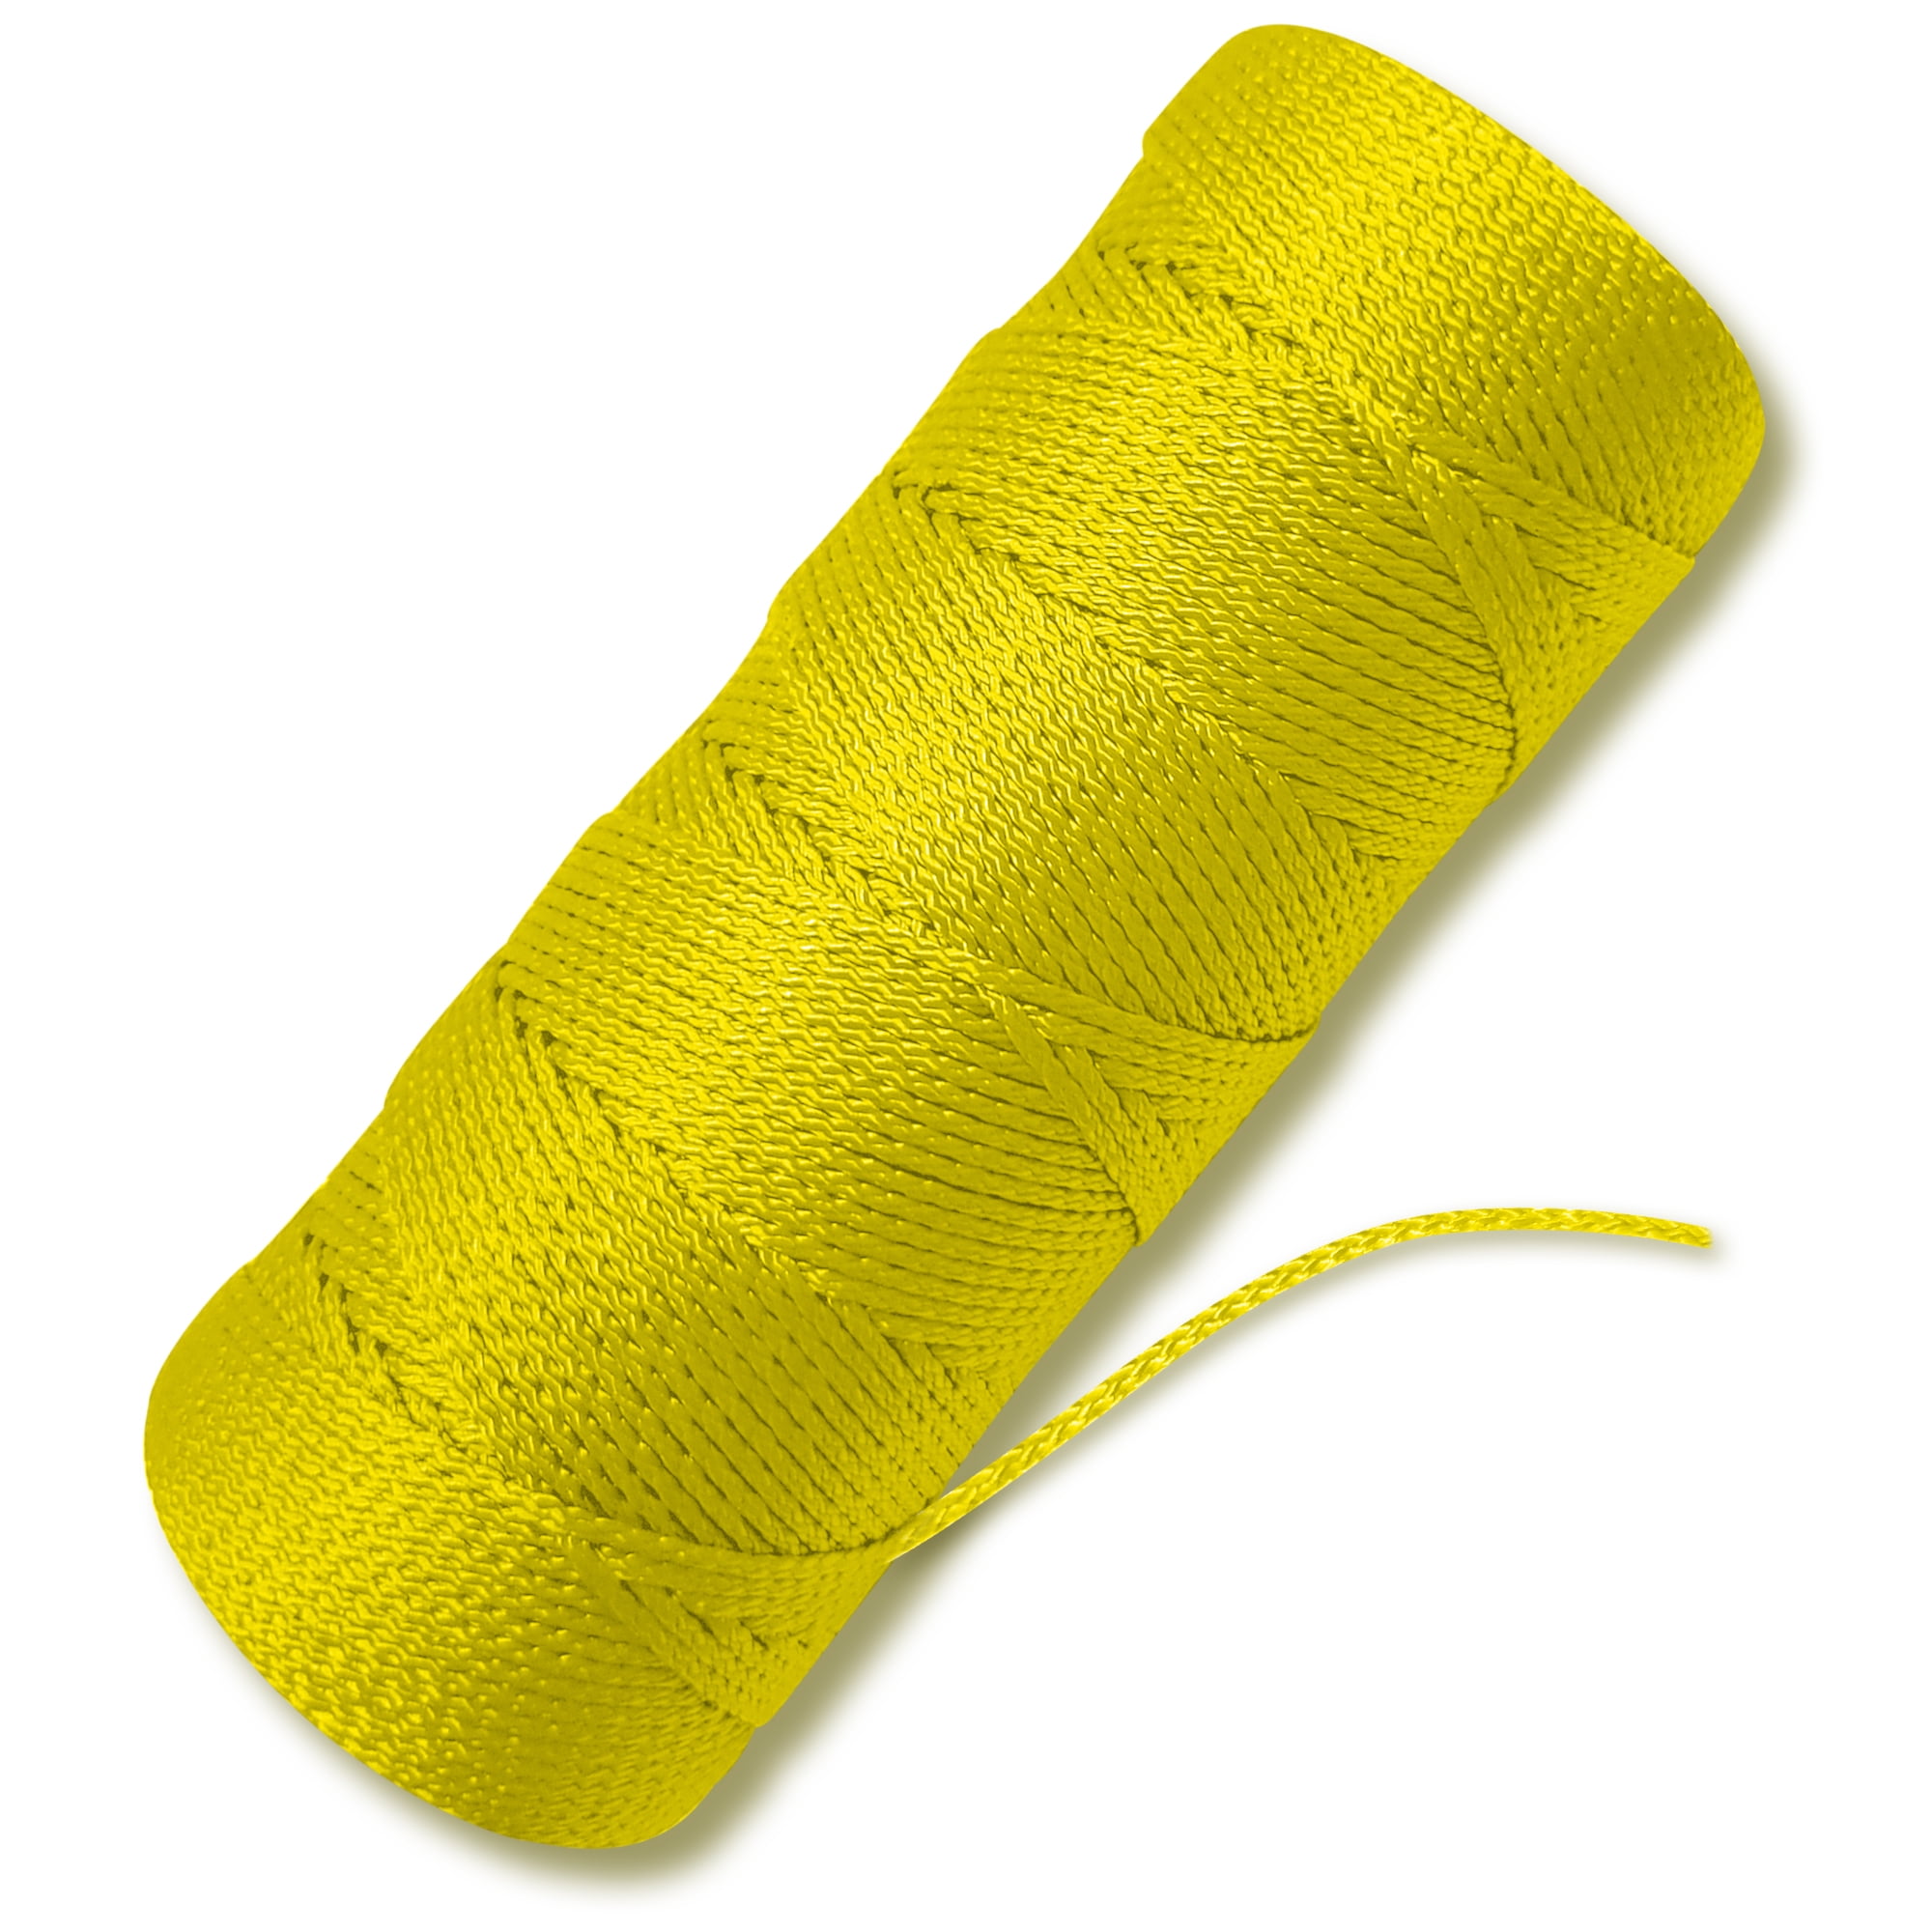 cridoz Lanyard String, Boondoggle String Kit with 20 Rolls Plastic Lac –  WoodArtSupply